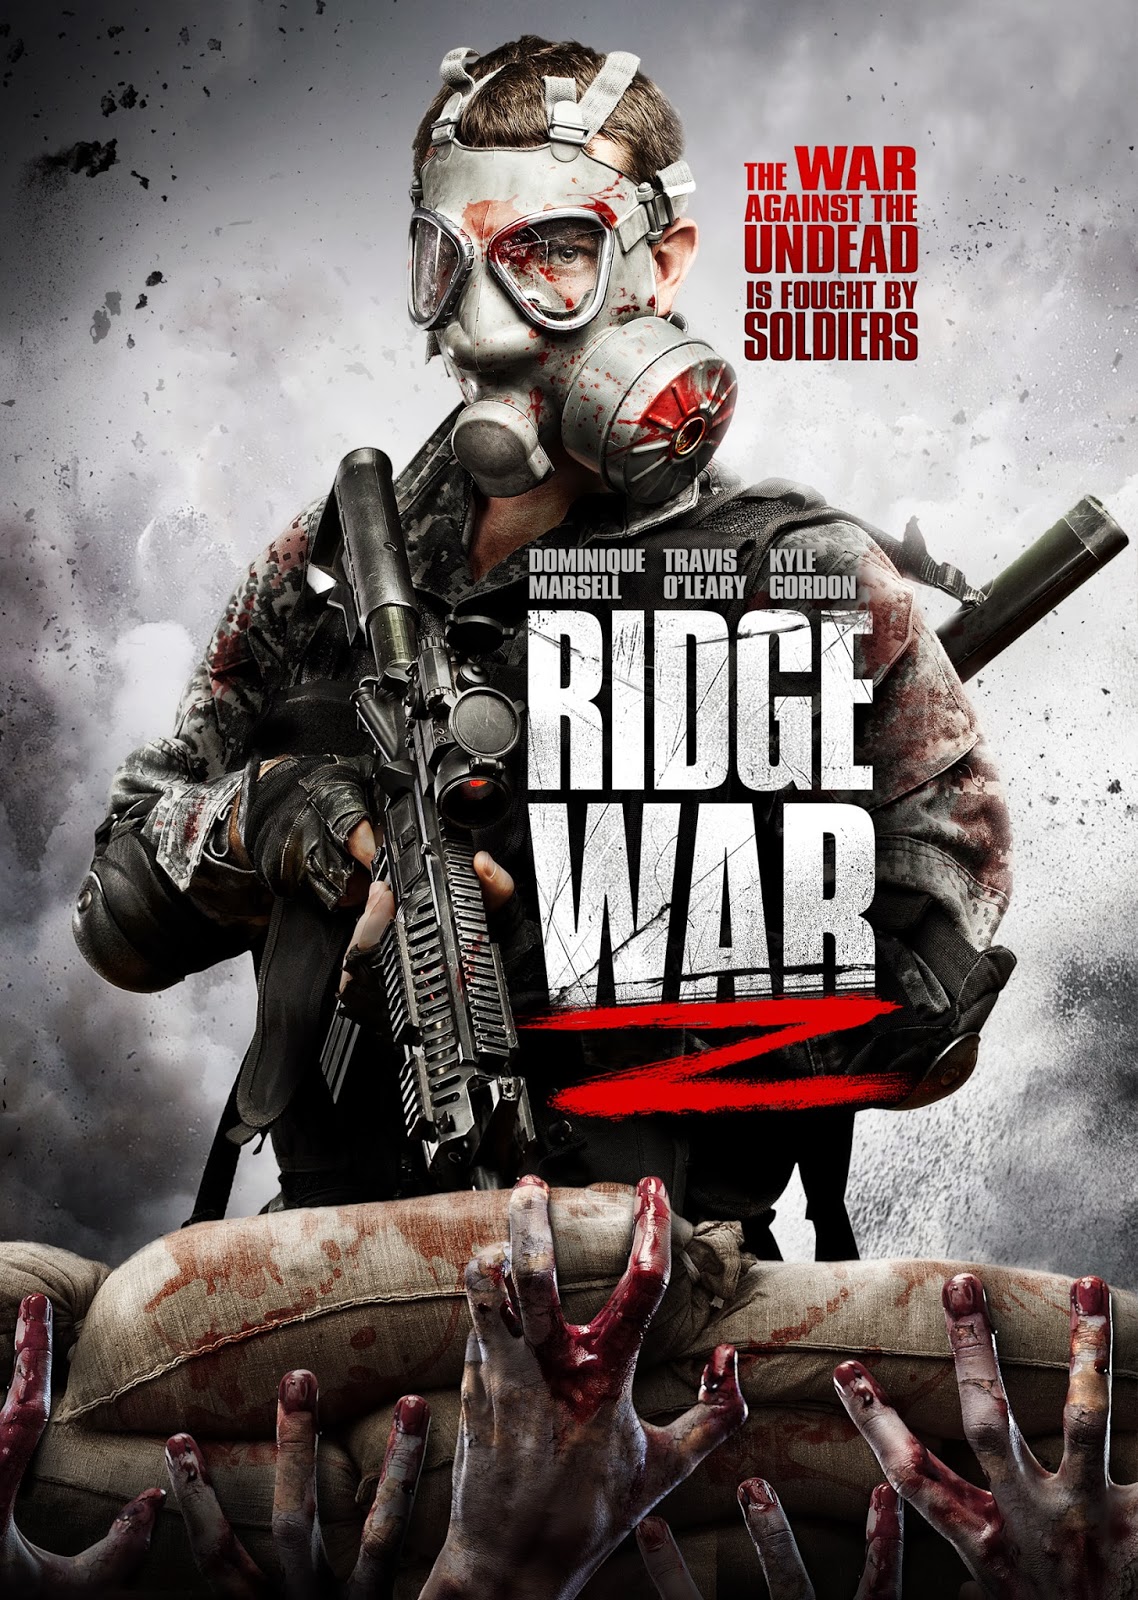 Ridge War Z 2013 - Official Trailer - YouTube